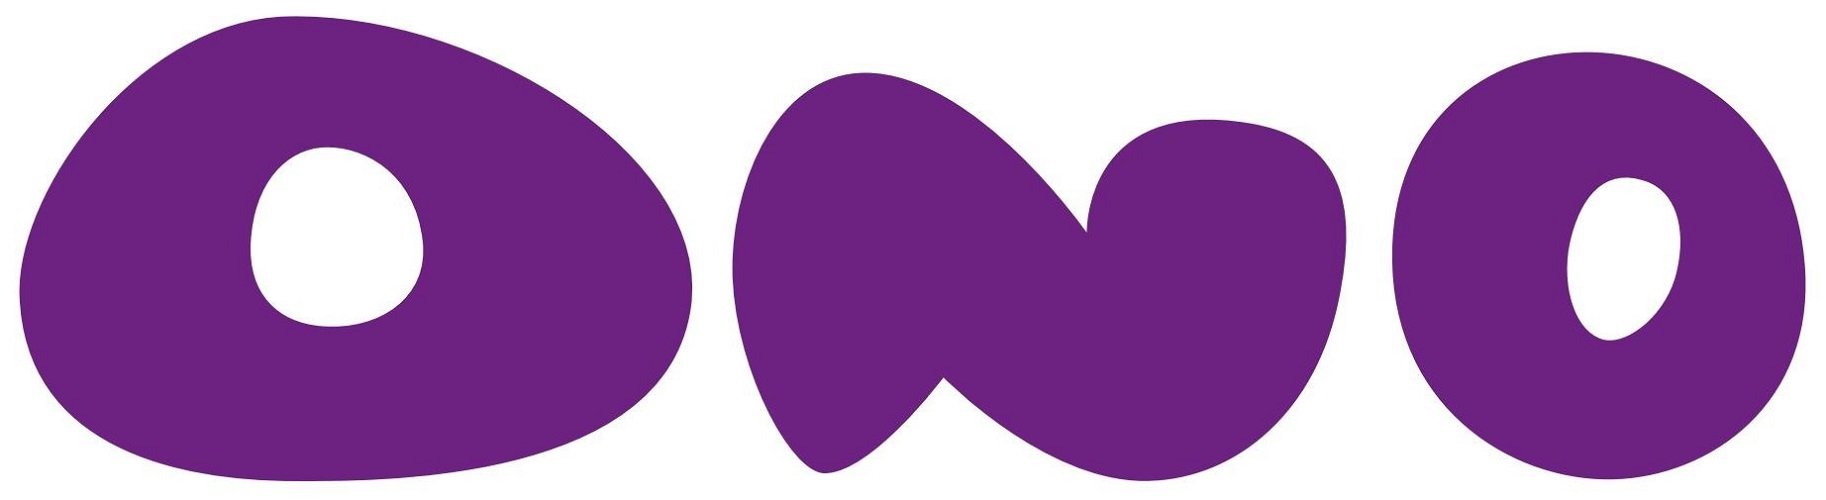 Ono Logo [PDF]